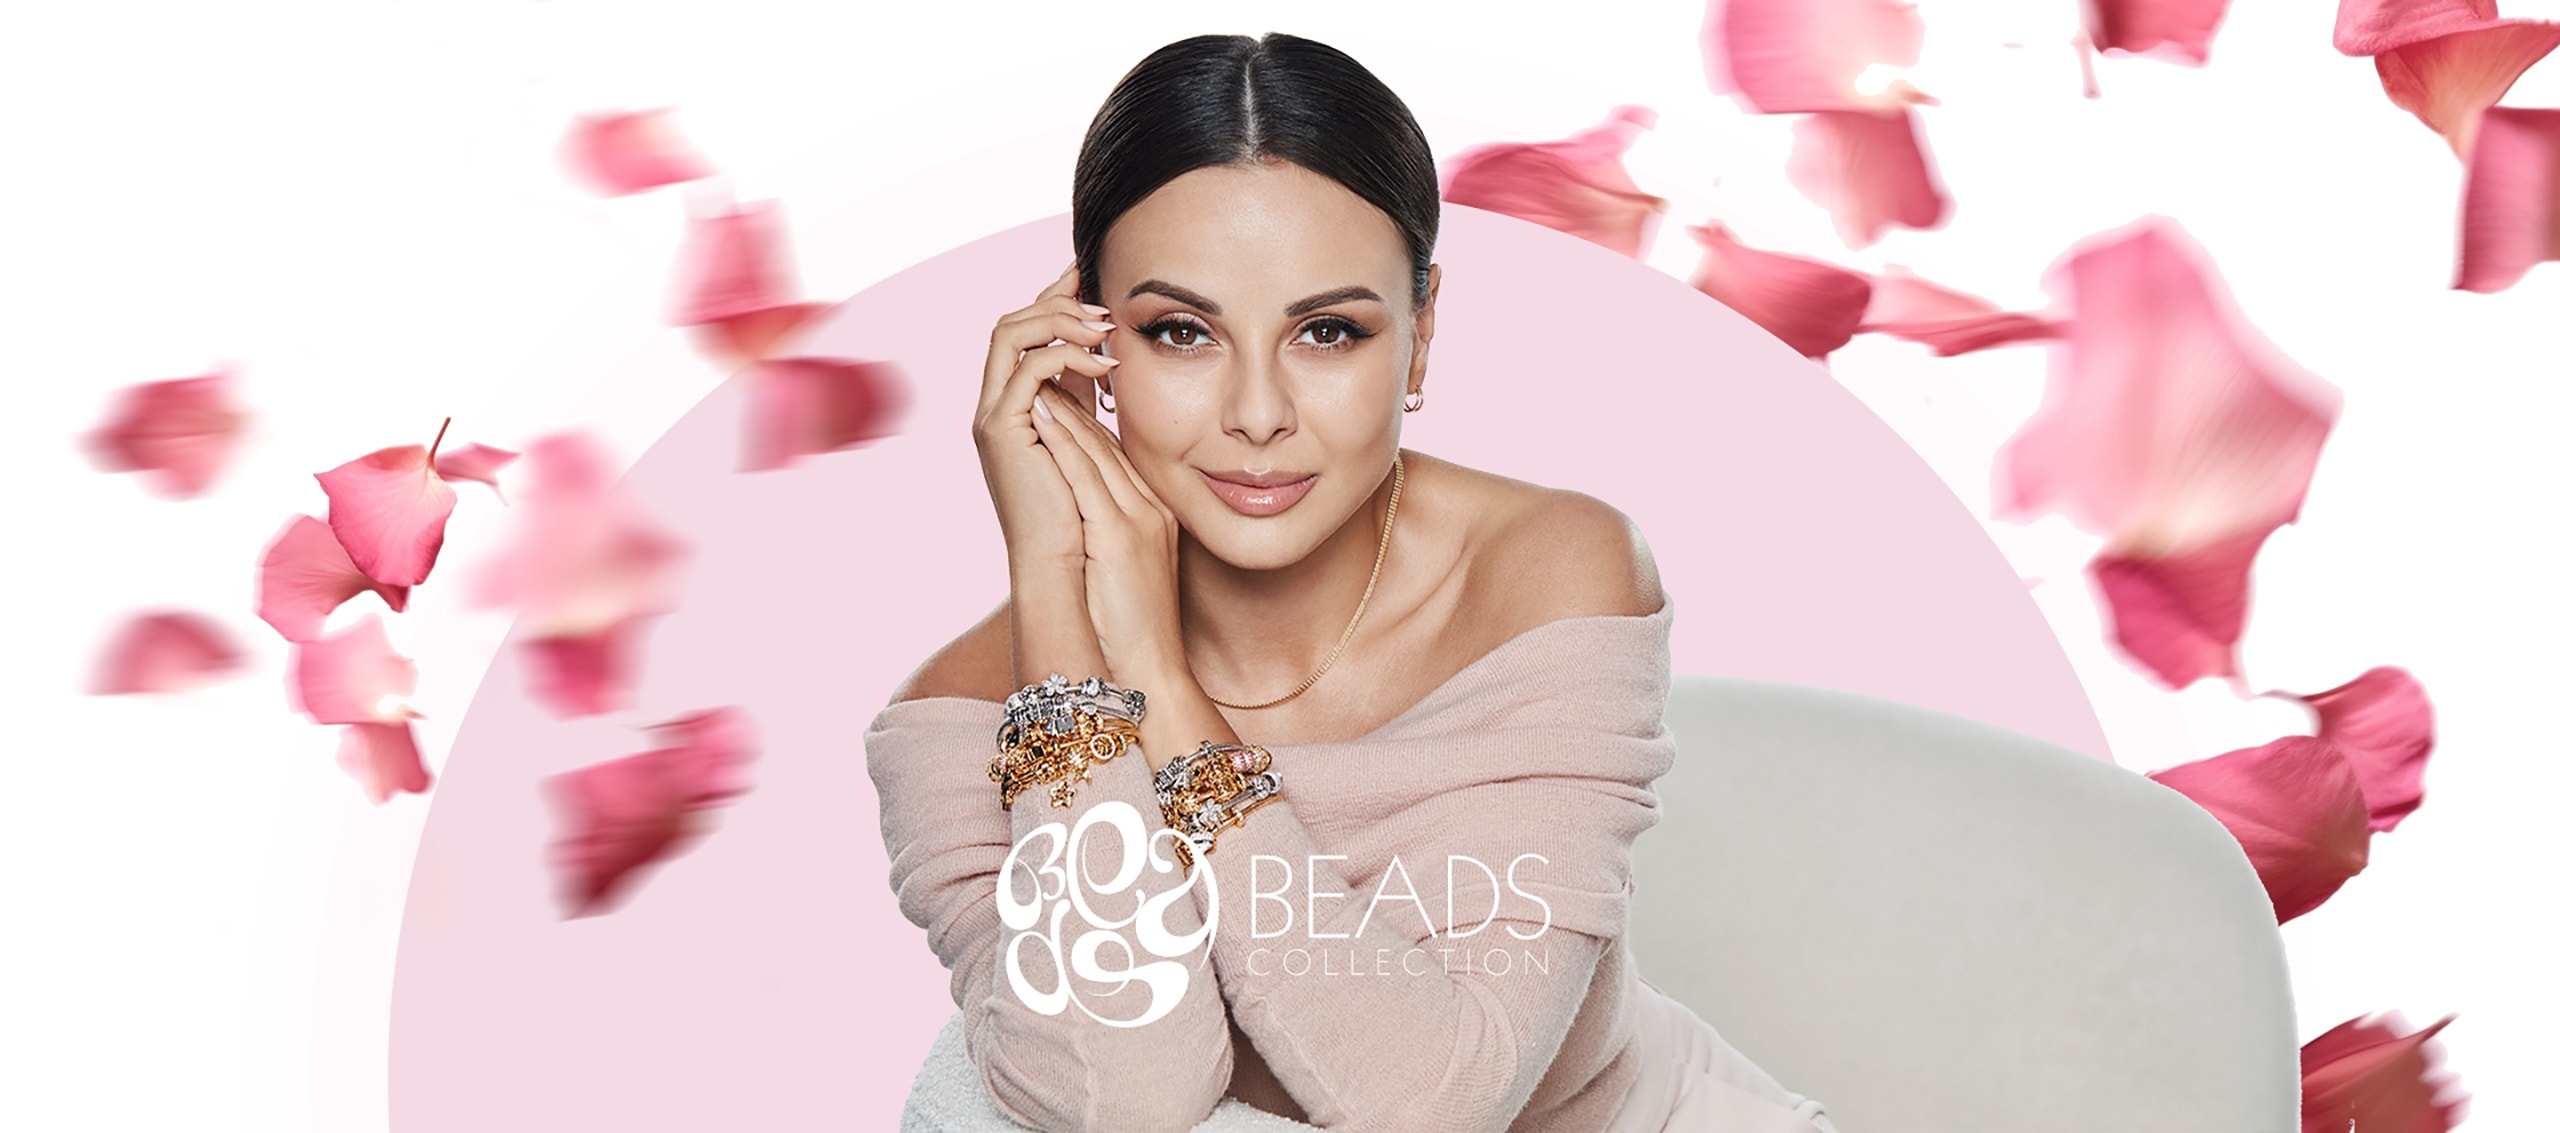 Monika Bagarova i Beads Collection Apart